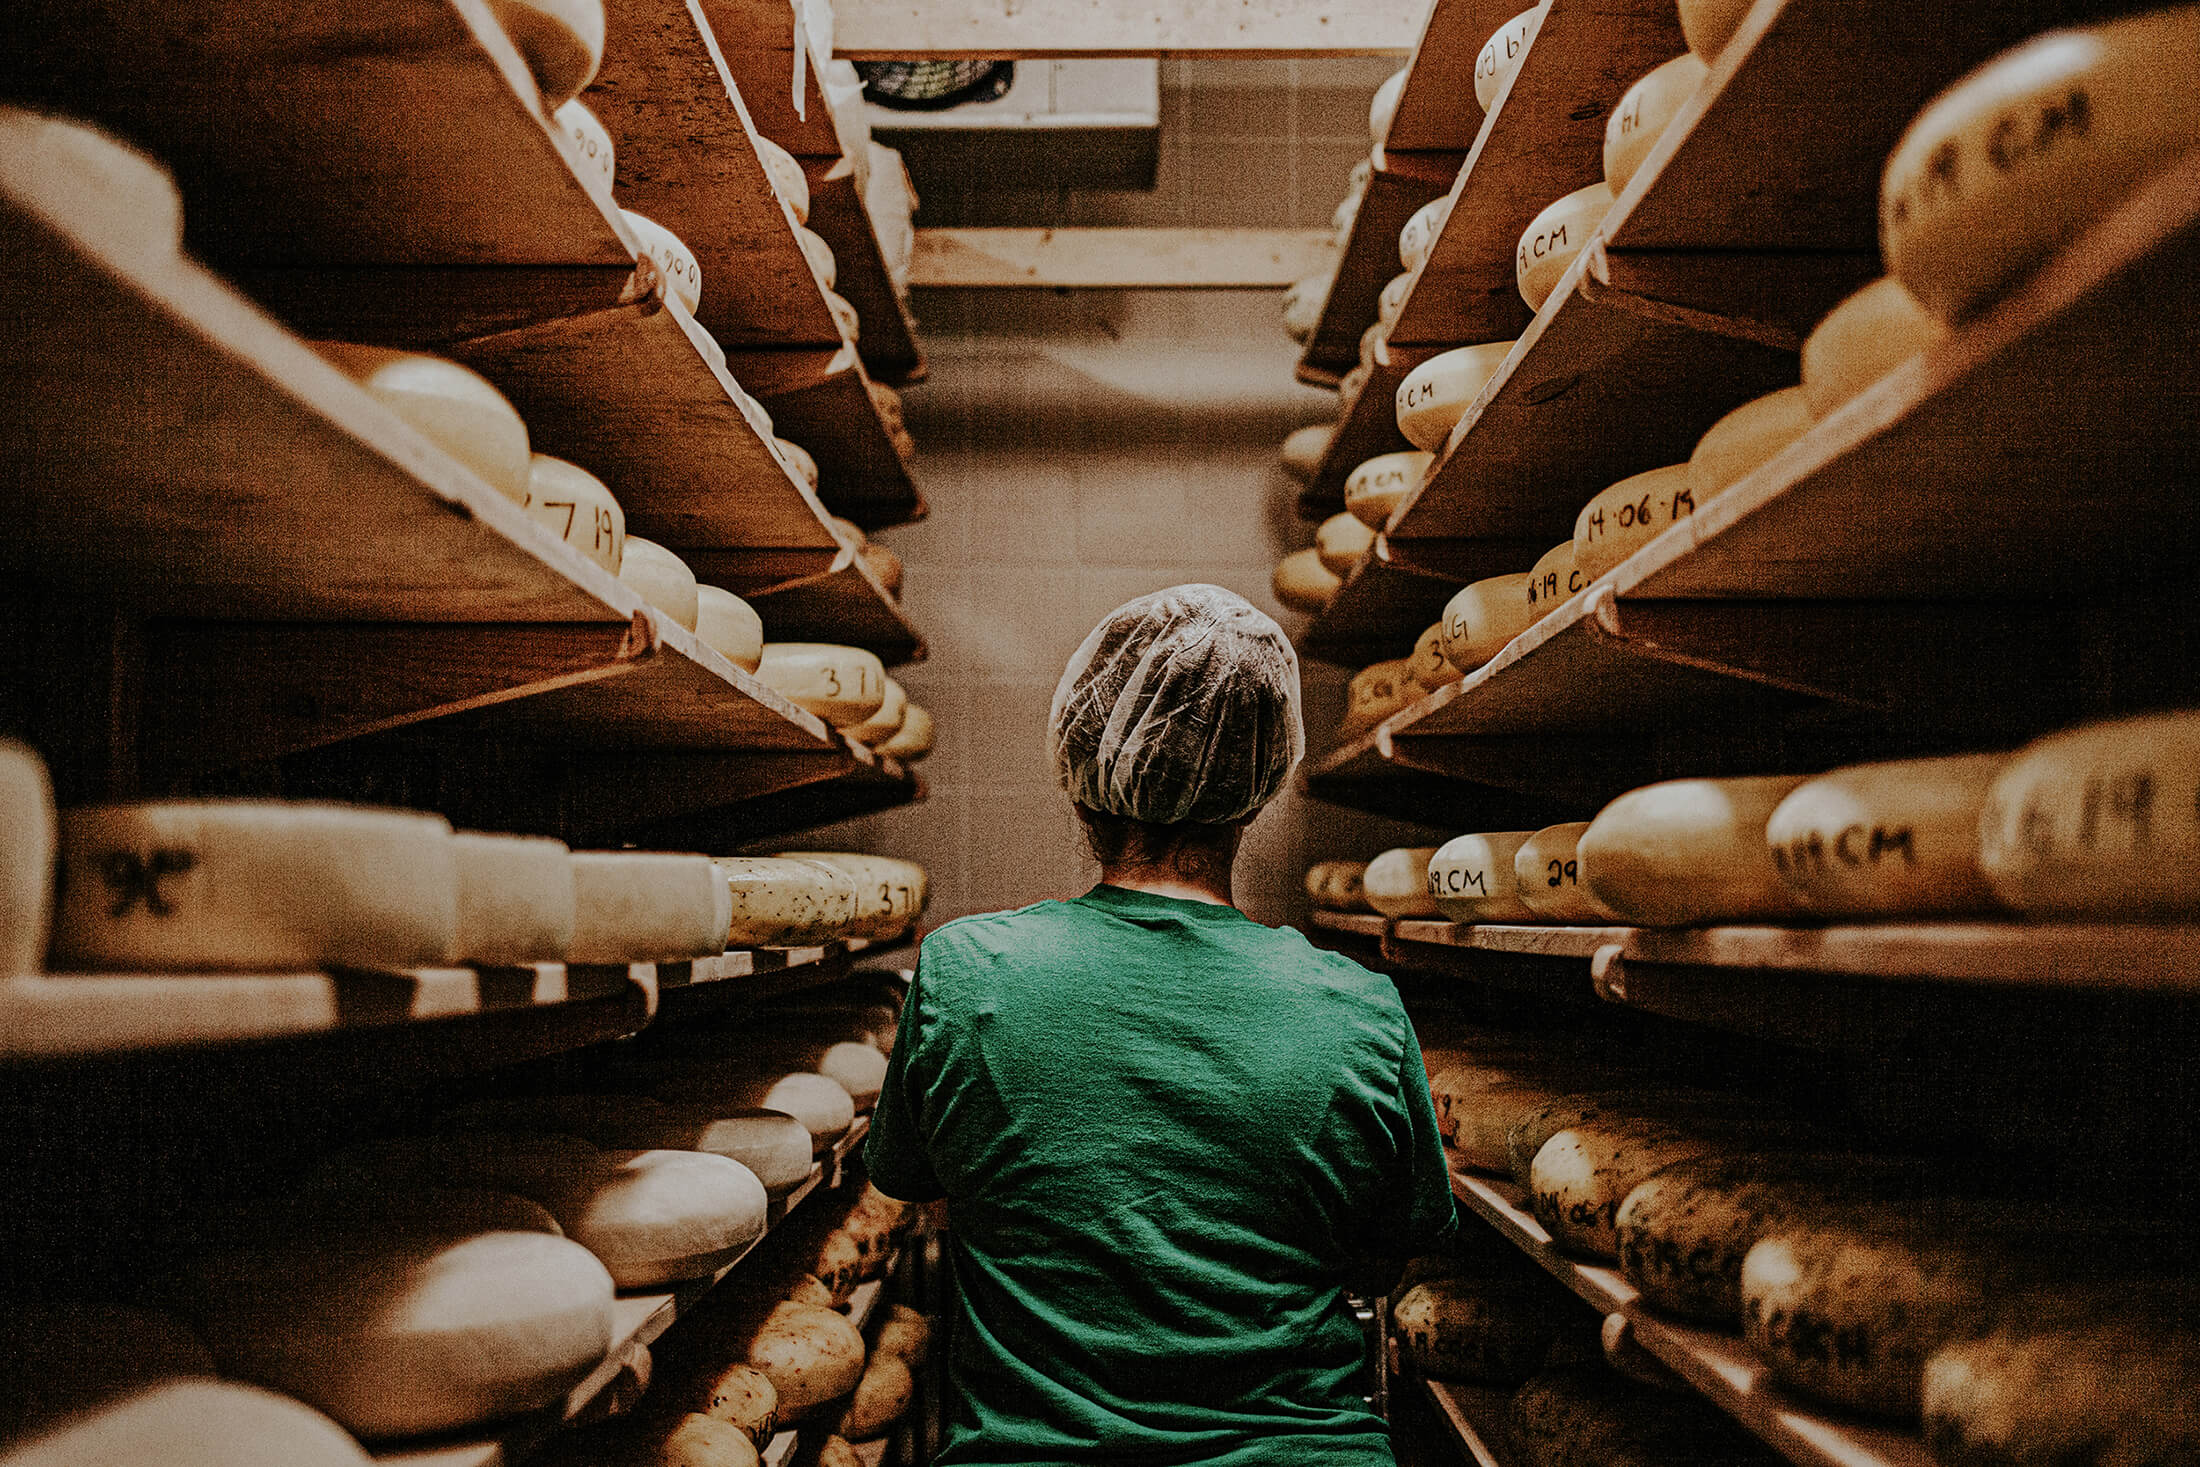 A woman walks between shelves of cheese wheels.